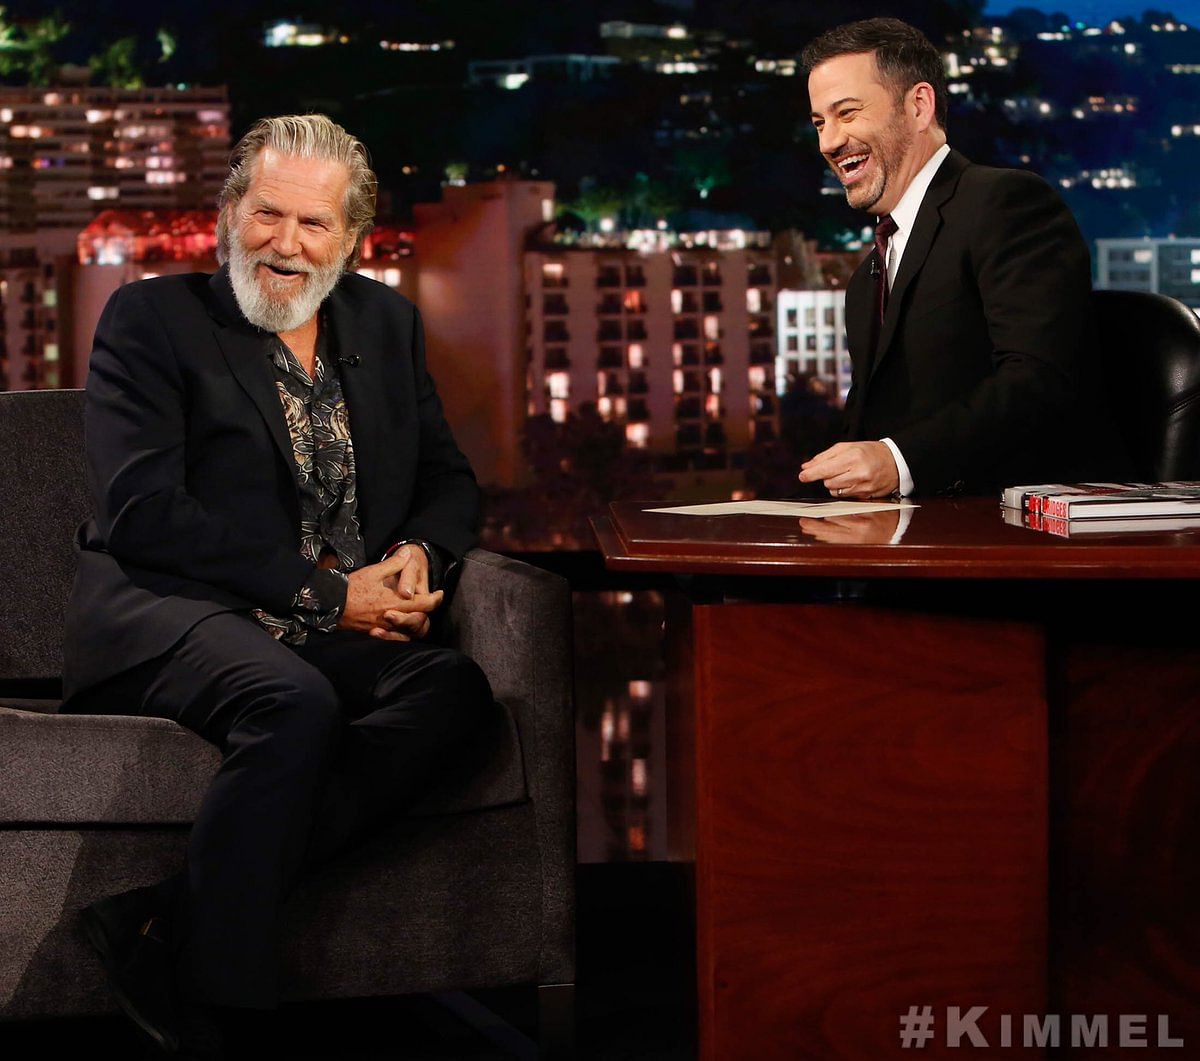 Jeff Bridges (L) at the Jimmy Kimmel Show (R) (Twitter Image)